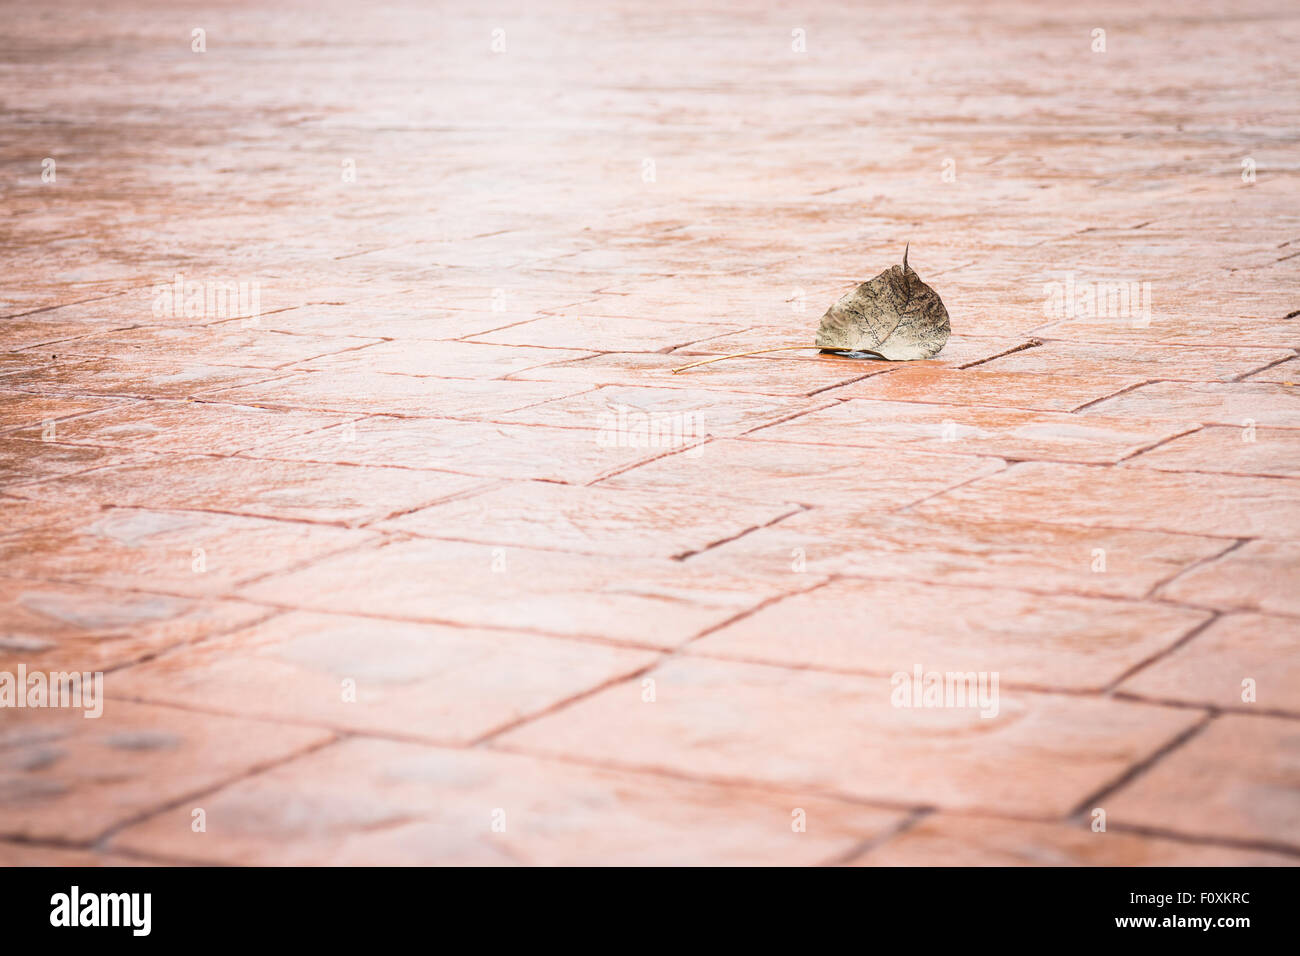 Bodhi or pho leaf dry on brick floor, stock photo Stock Photo